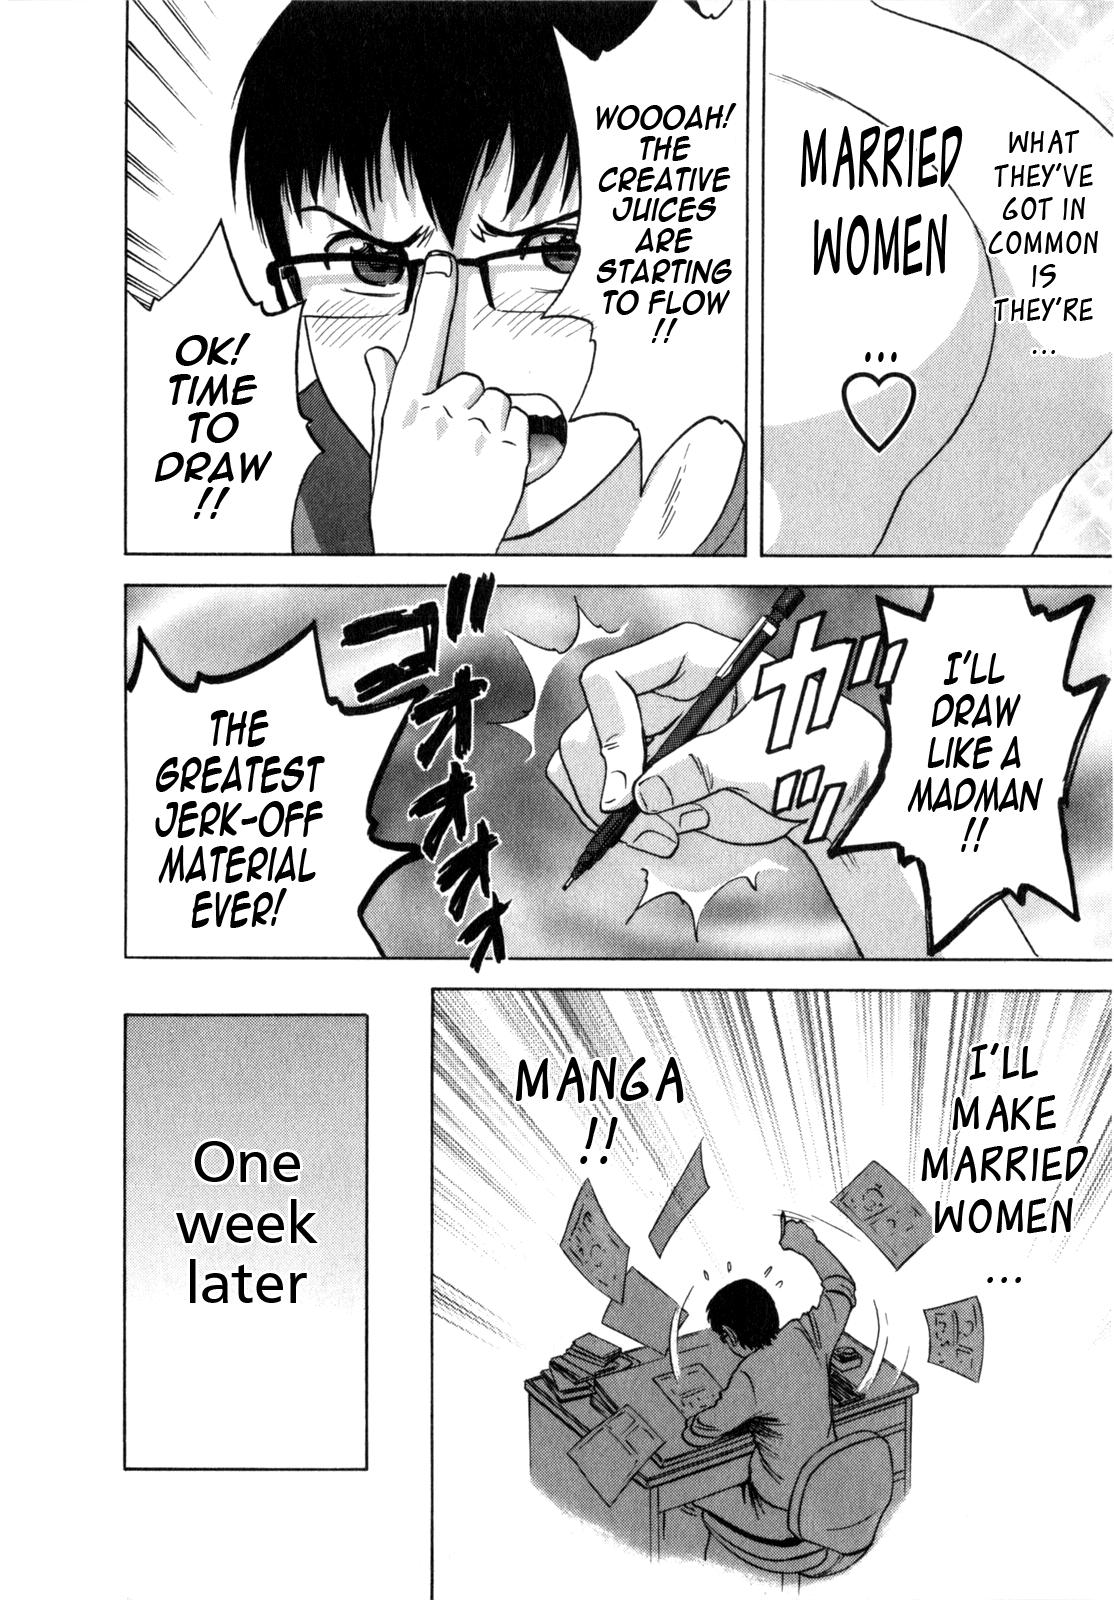 [Hidemaru] Life with Married Women Just Like a Manga 1 - Ch. 1-9 [English] {Tadanohito} 69